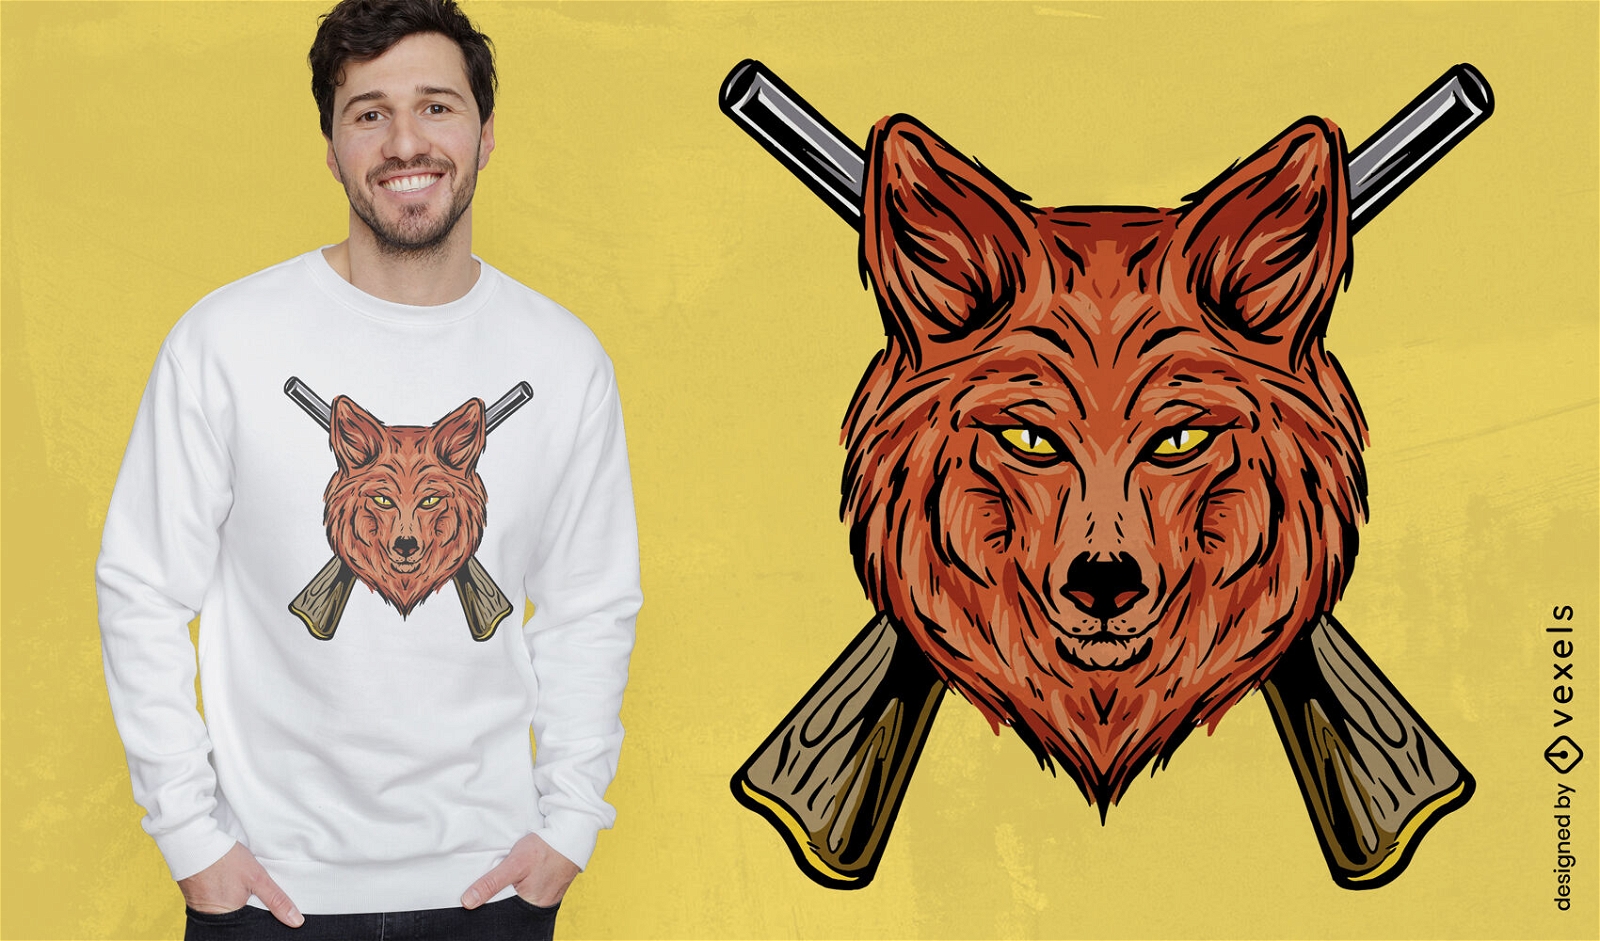 Coyote-Tierjagd-T-Shirt-Design